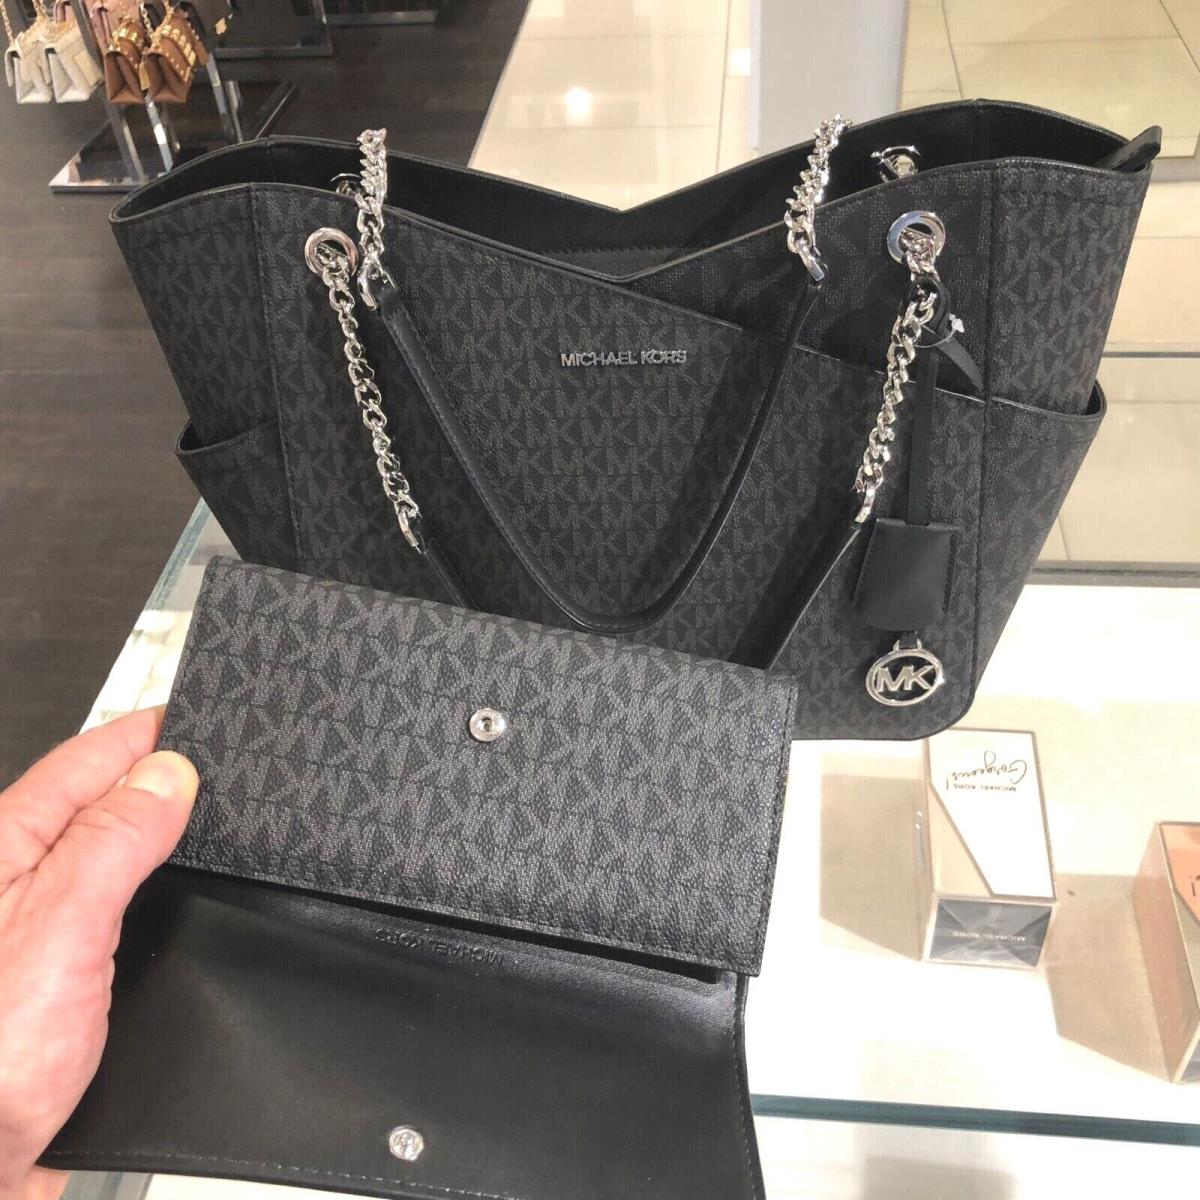 Michael Kors Leather or Pvc Shoulder Tote Bag Purse Handbag + id Trifold Wallet